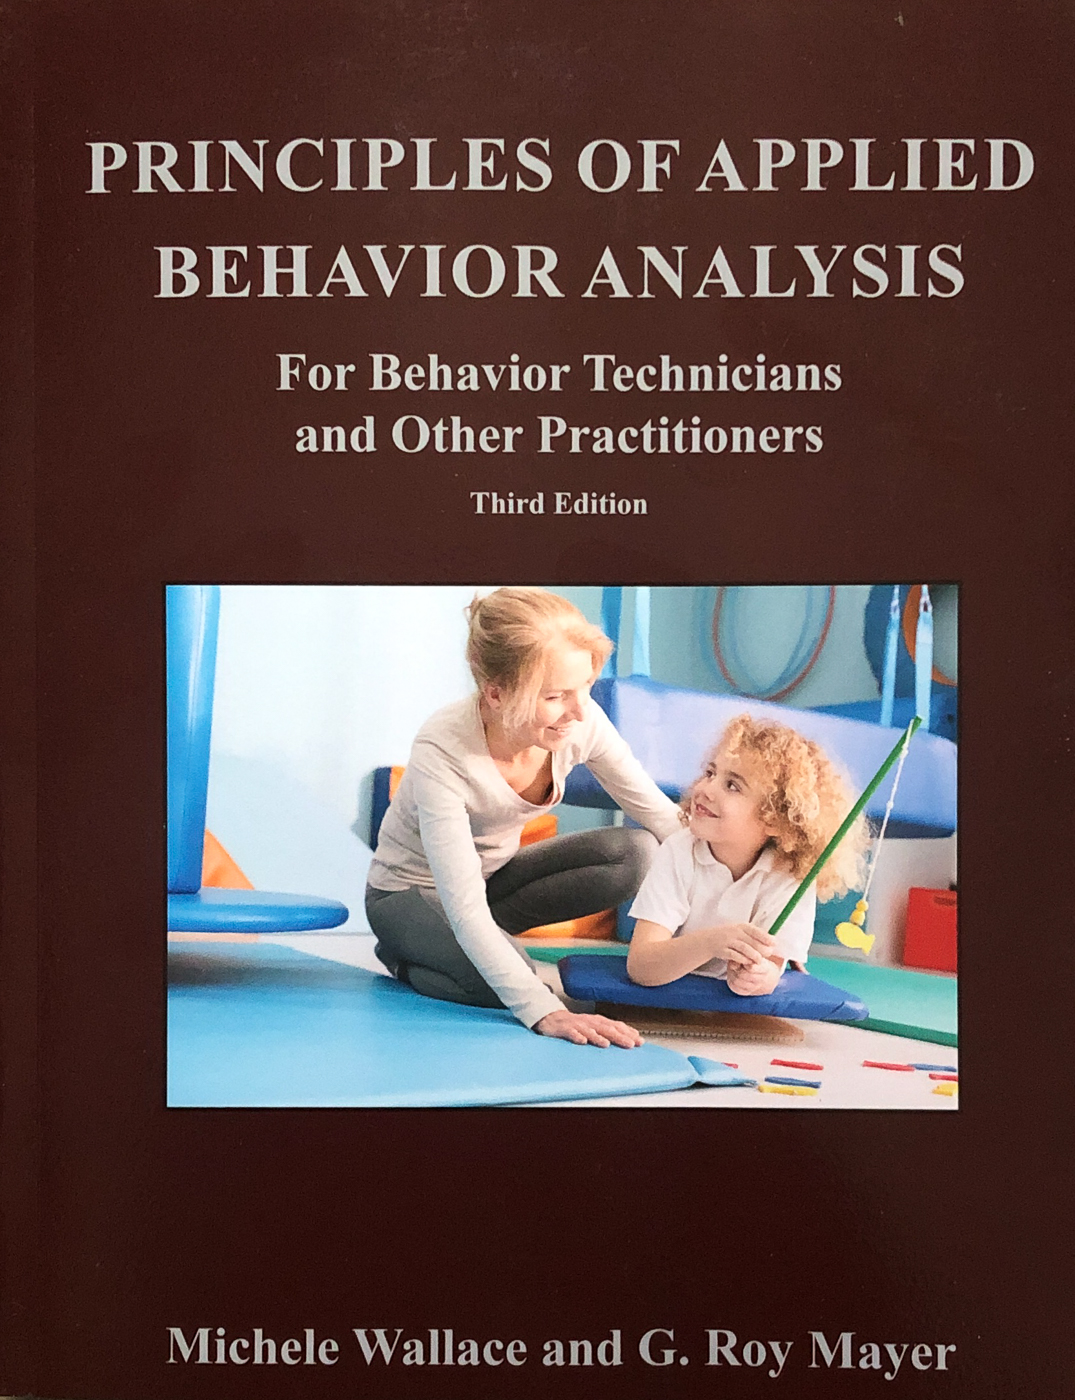 phd in applied behavior analysis uk